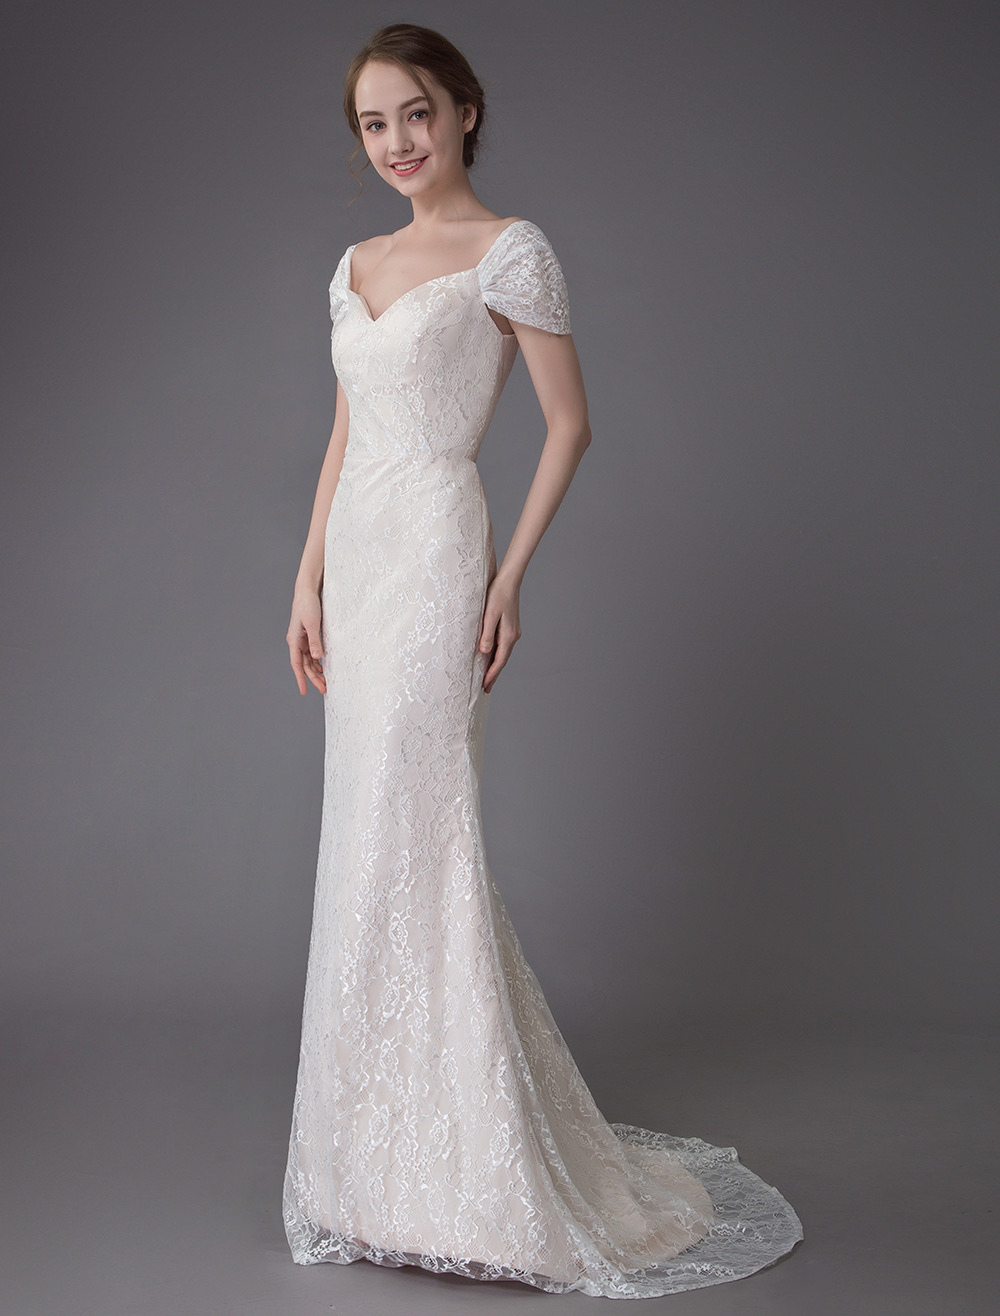 Lace Wedding Dress Vanilla Cream Sweetheart Short Sleeve Bridal Dress ...